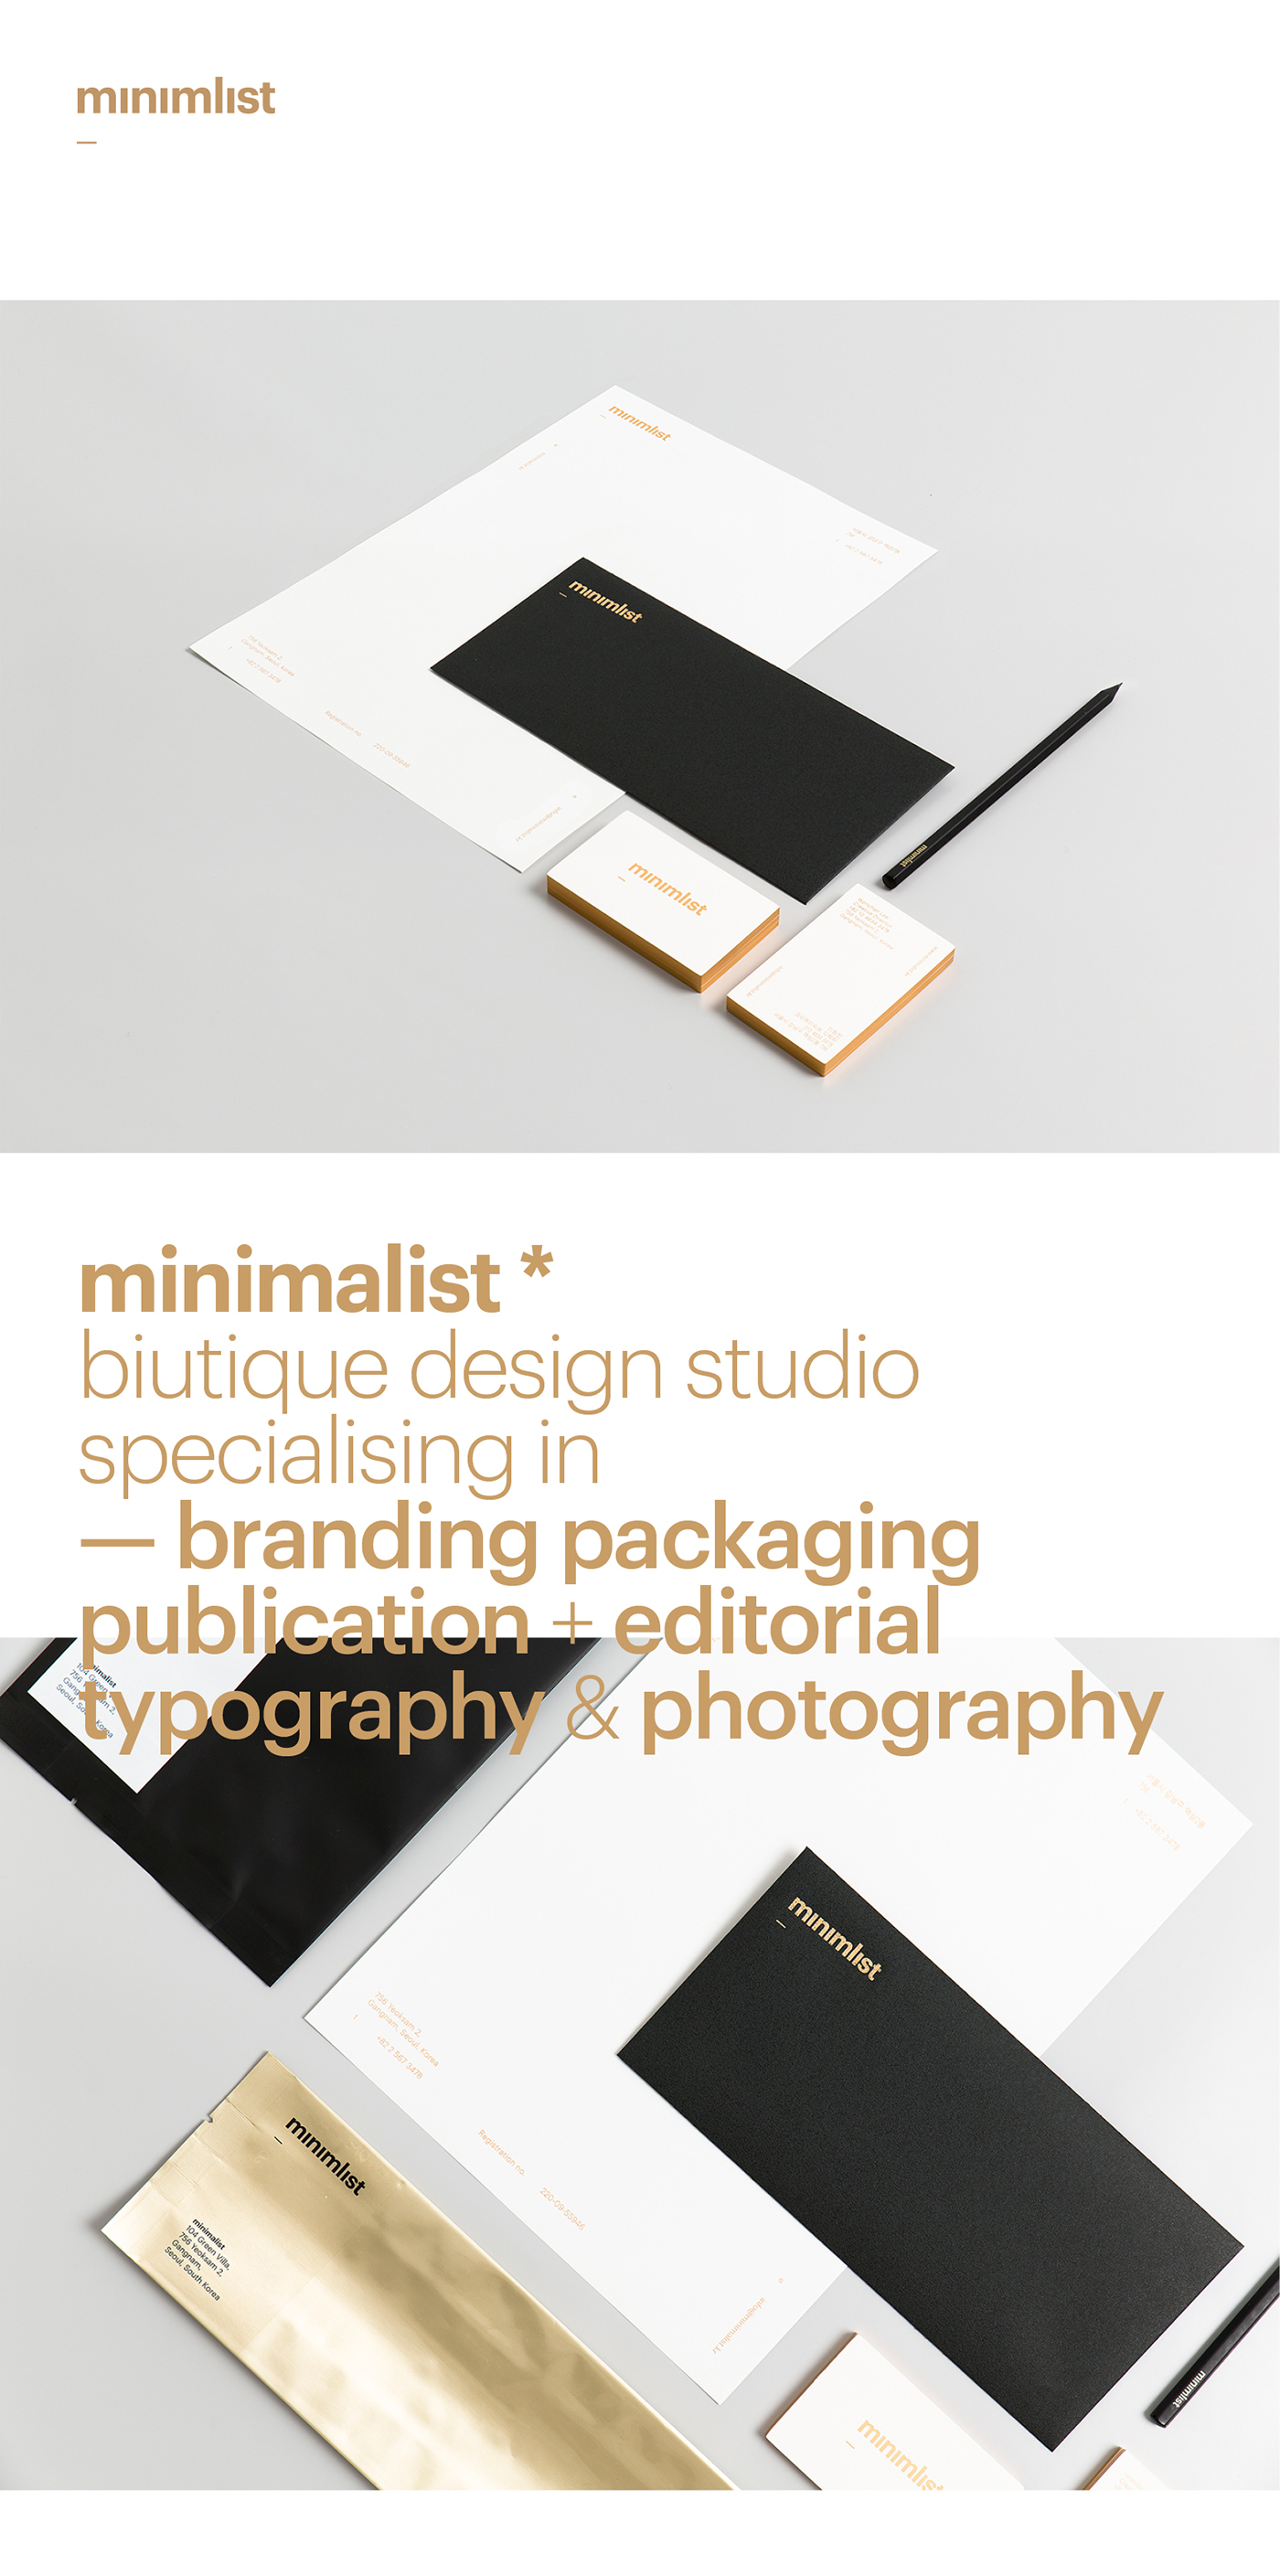 minimised minimalist.kr www.minimalist.kr minimalist studio minimalist design studio minimalist wonchan lee boutique studio gold foiling Minimlist